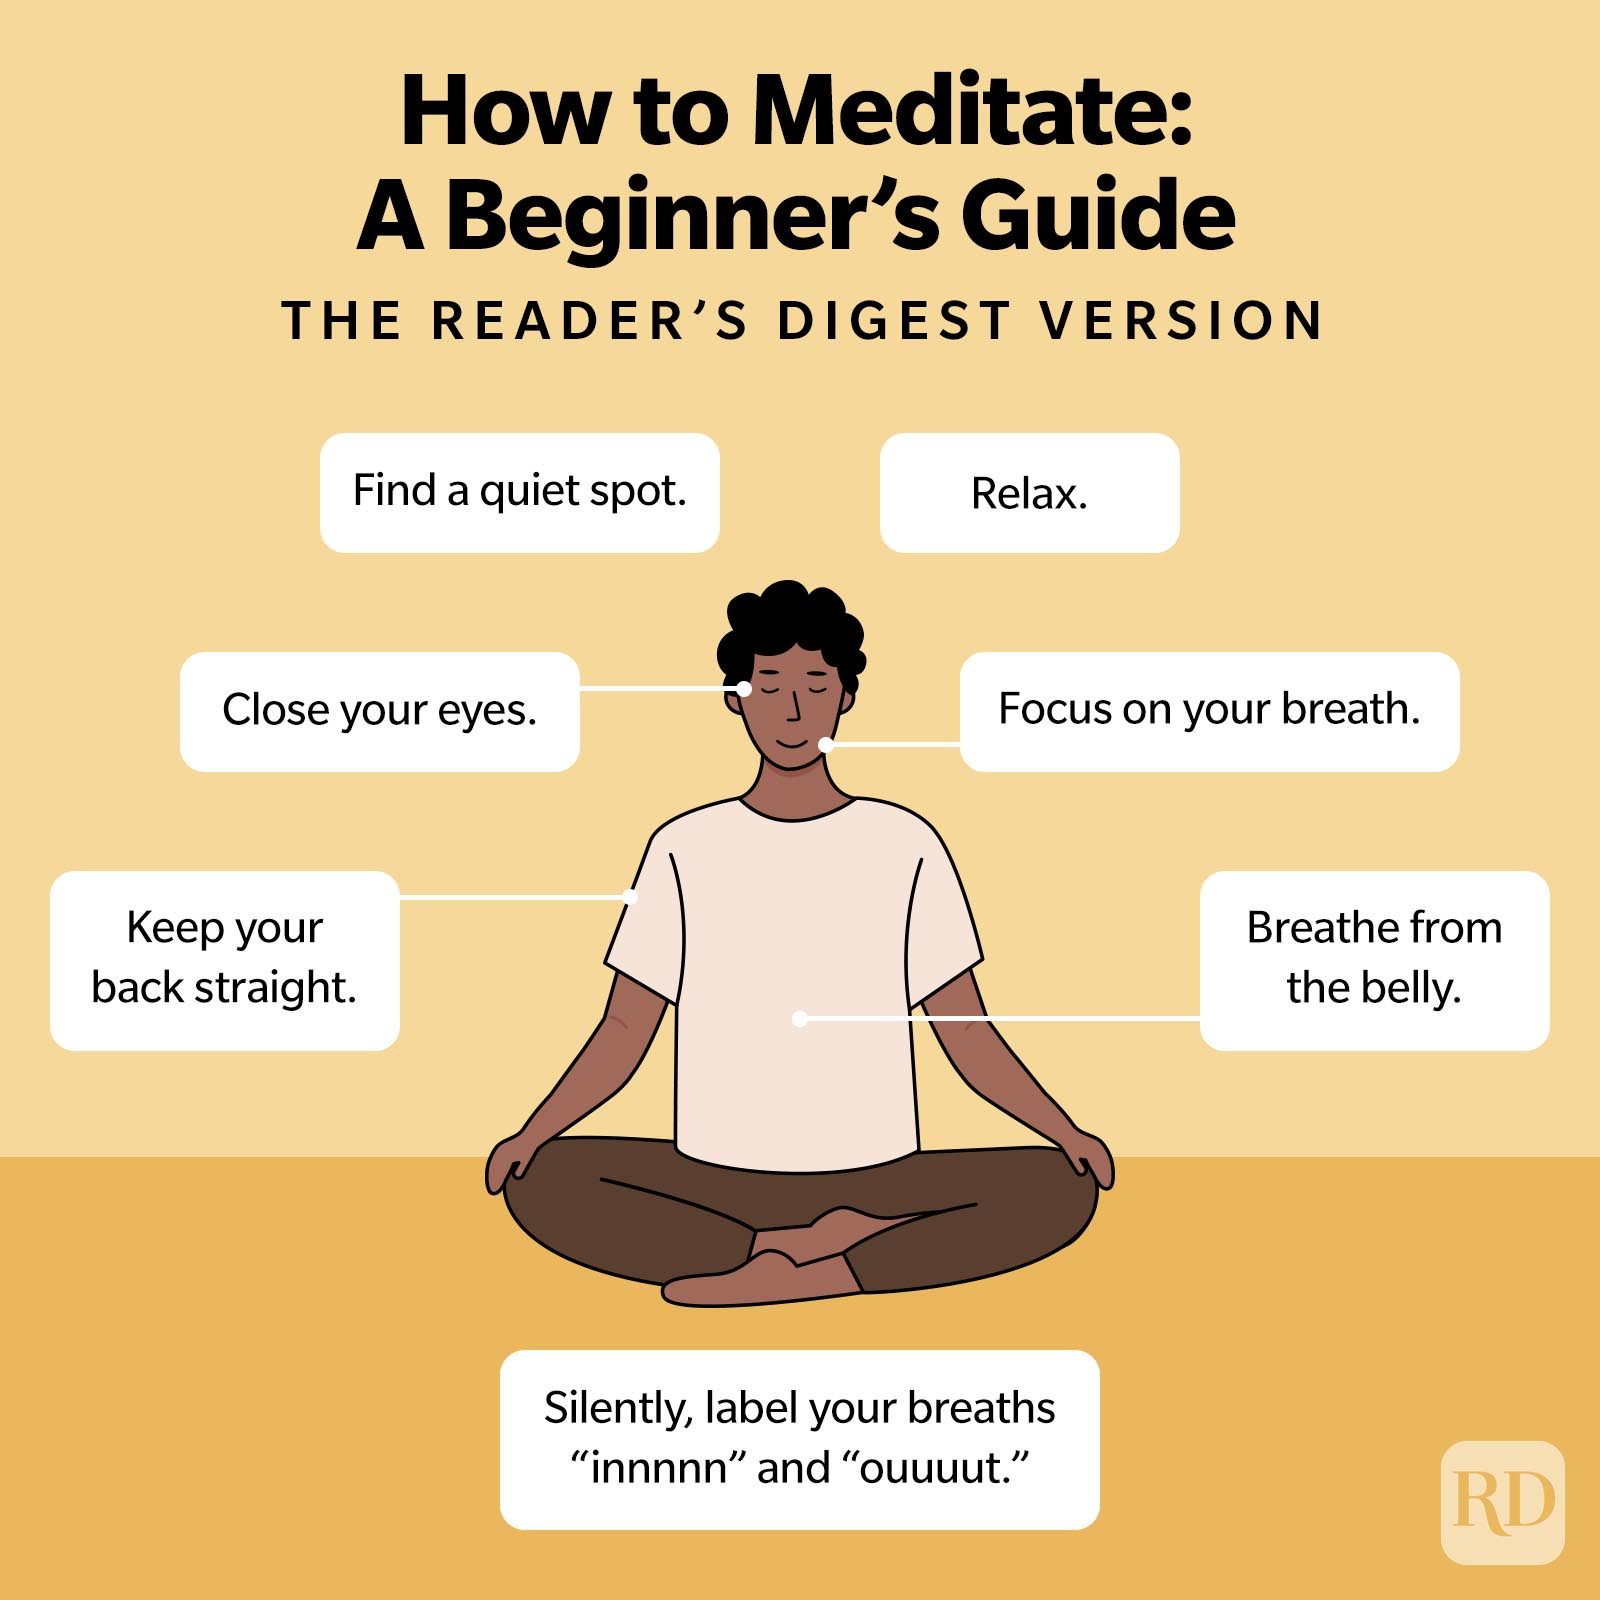 Yoga teacher meditative mug gift - Quiet your mind - Meditation